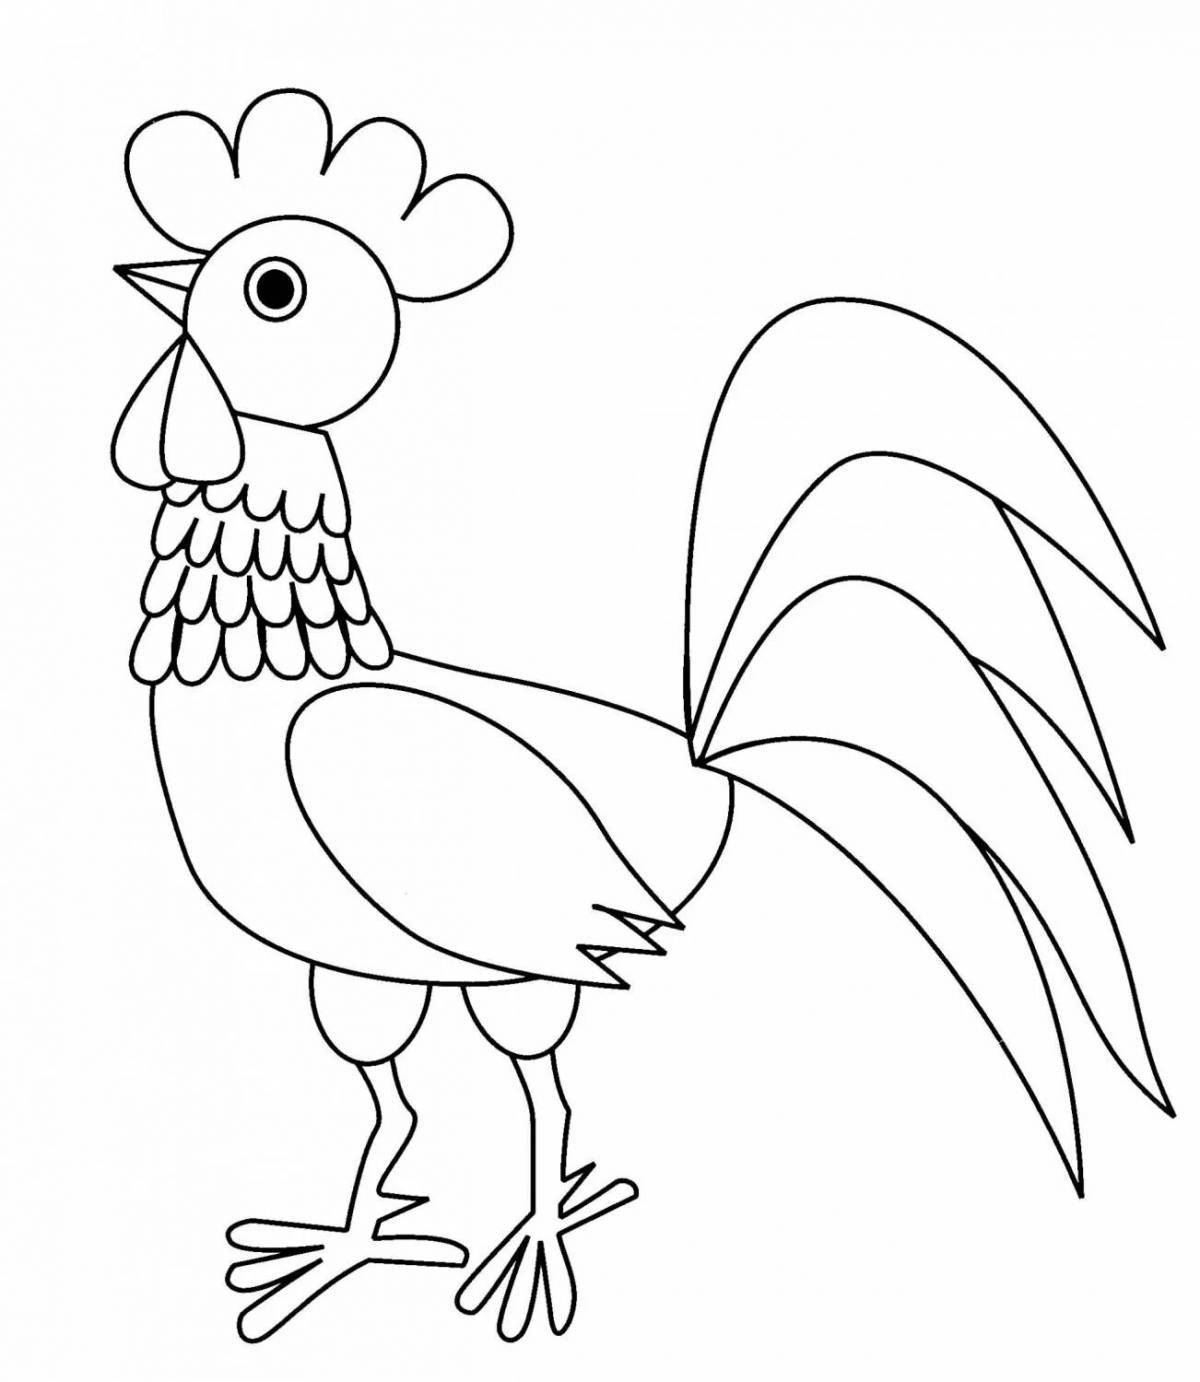 Creative cockerel pattern